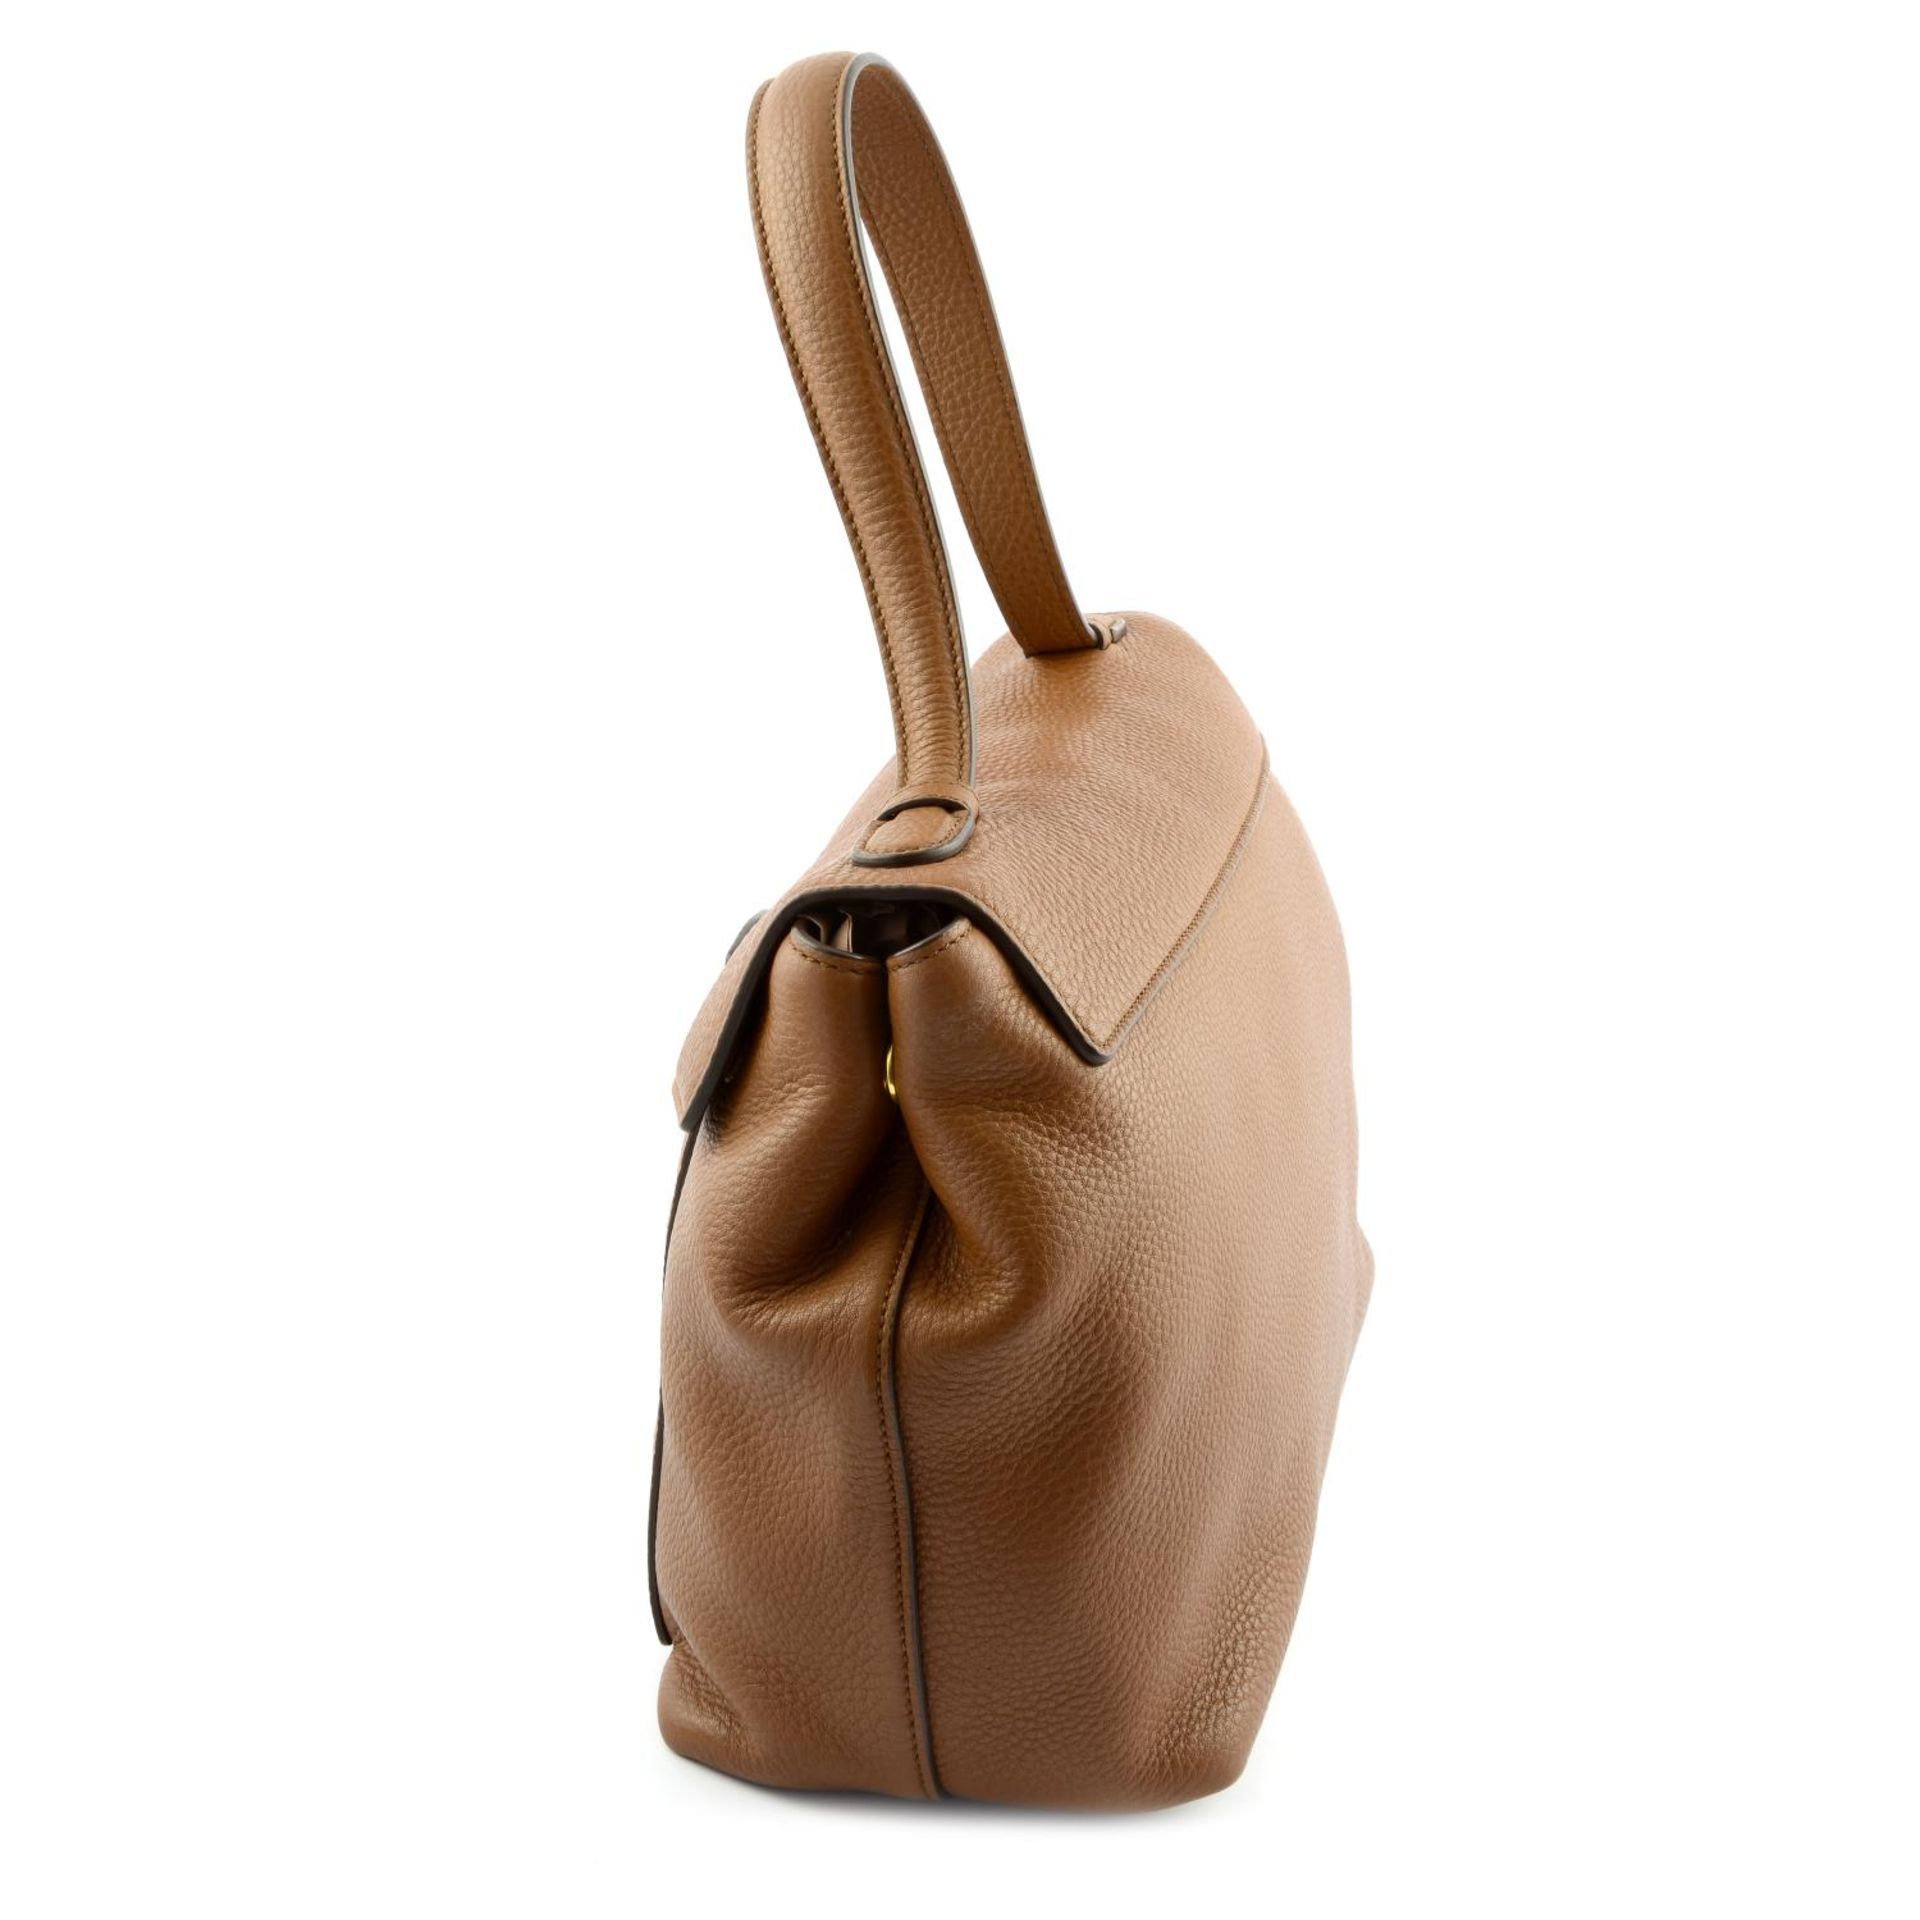 MIU MIU - a Vitello tan leather handbag. - Bild 3 aus 4